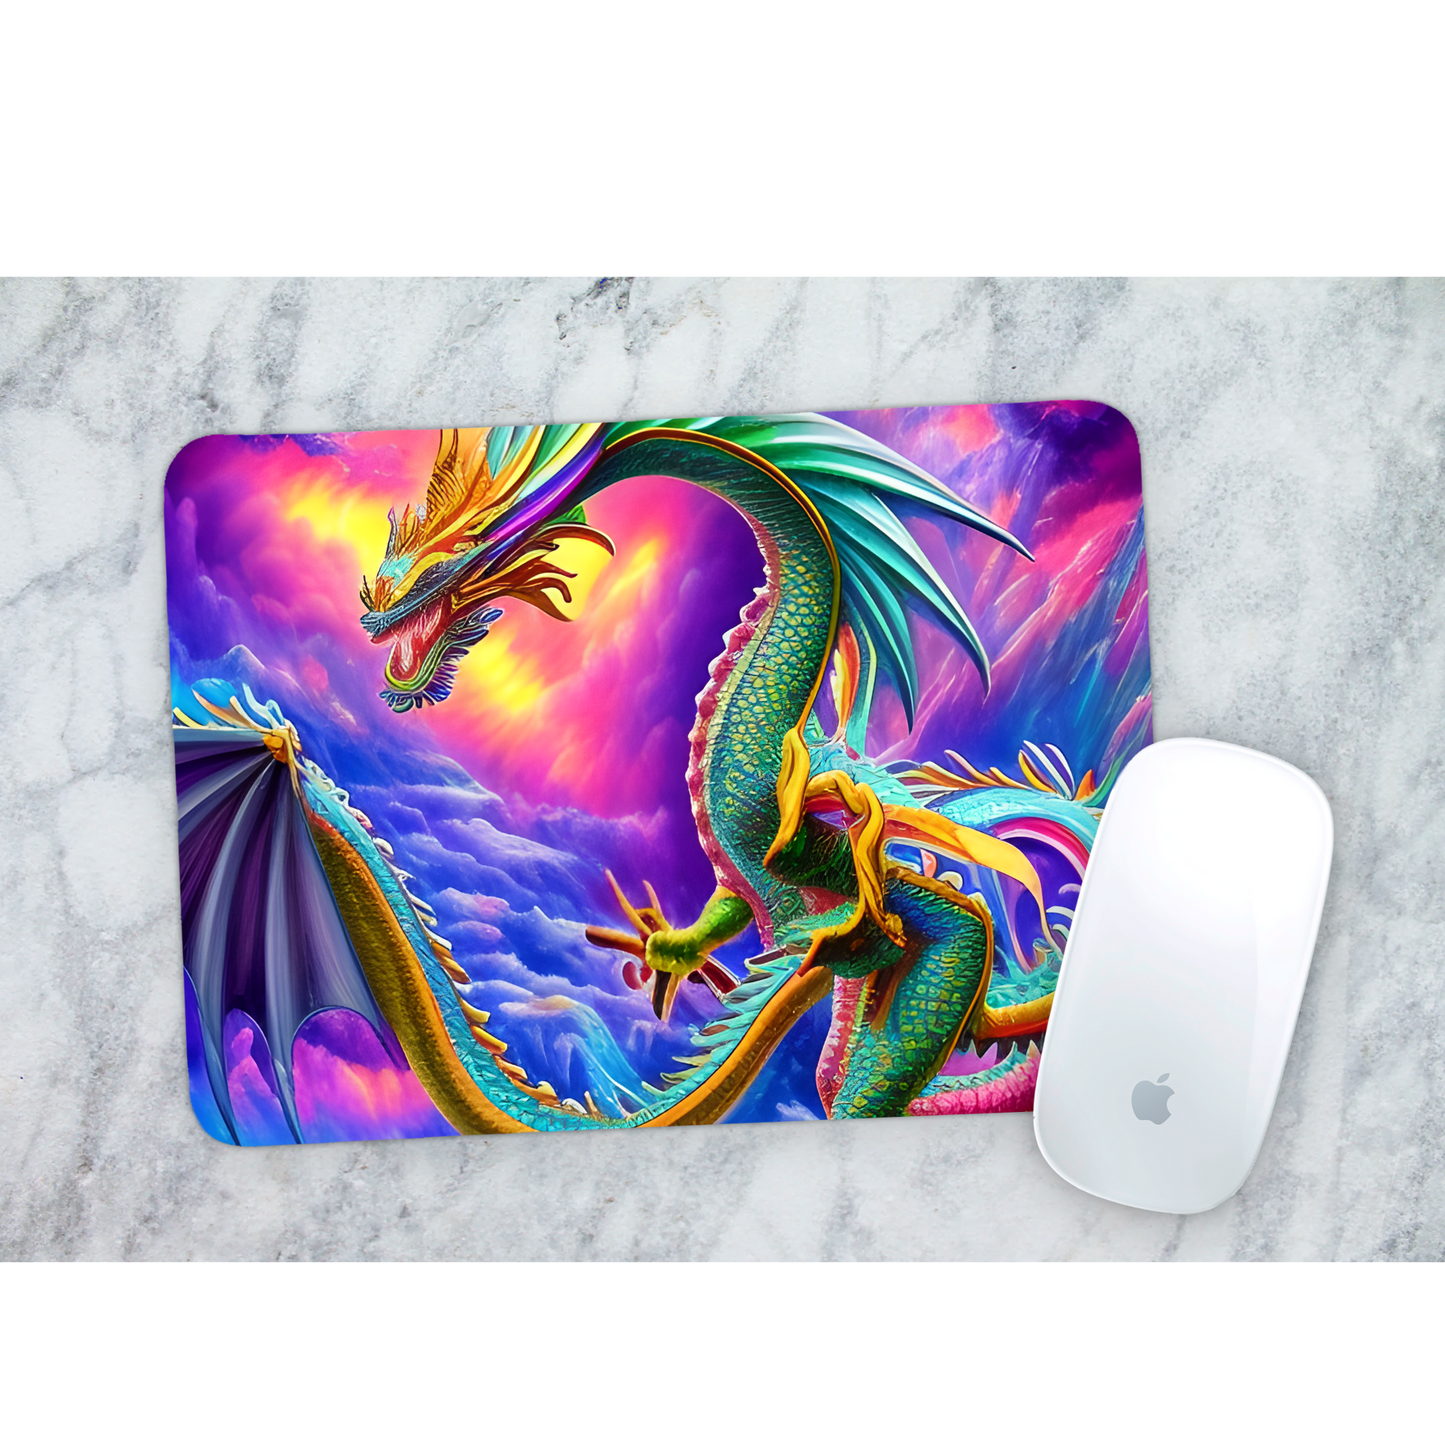 Premium Printed Anti-Slip Mouse Mat - Ultra Durable Colourful Dragon Design